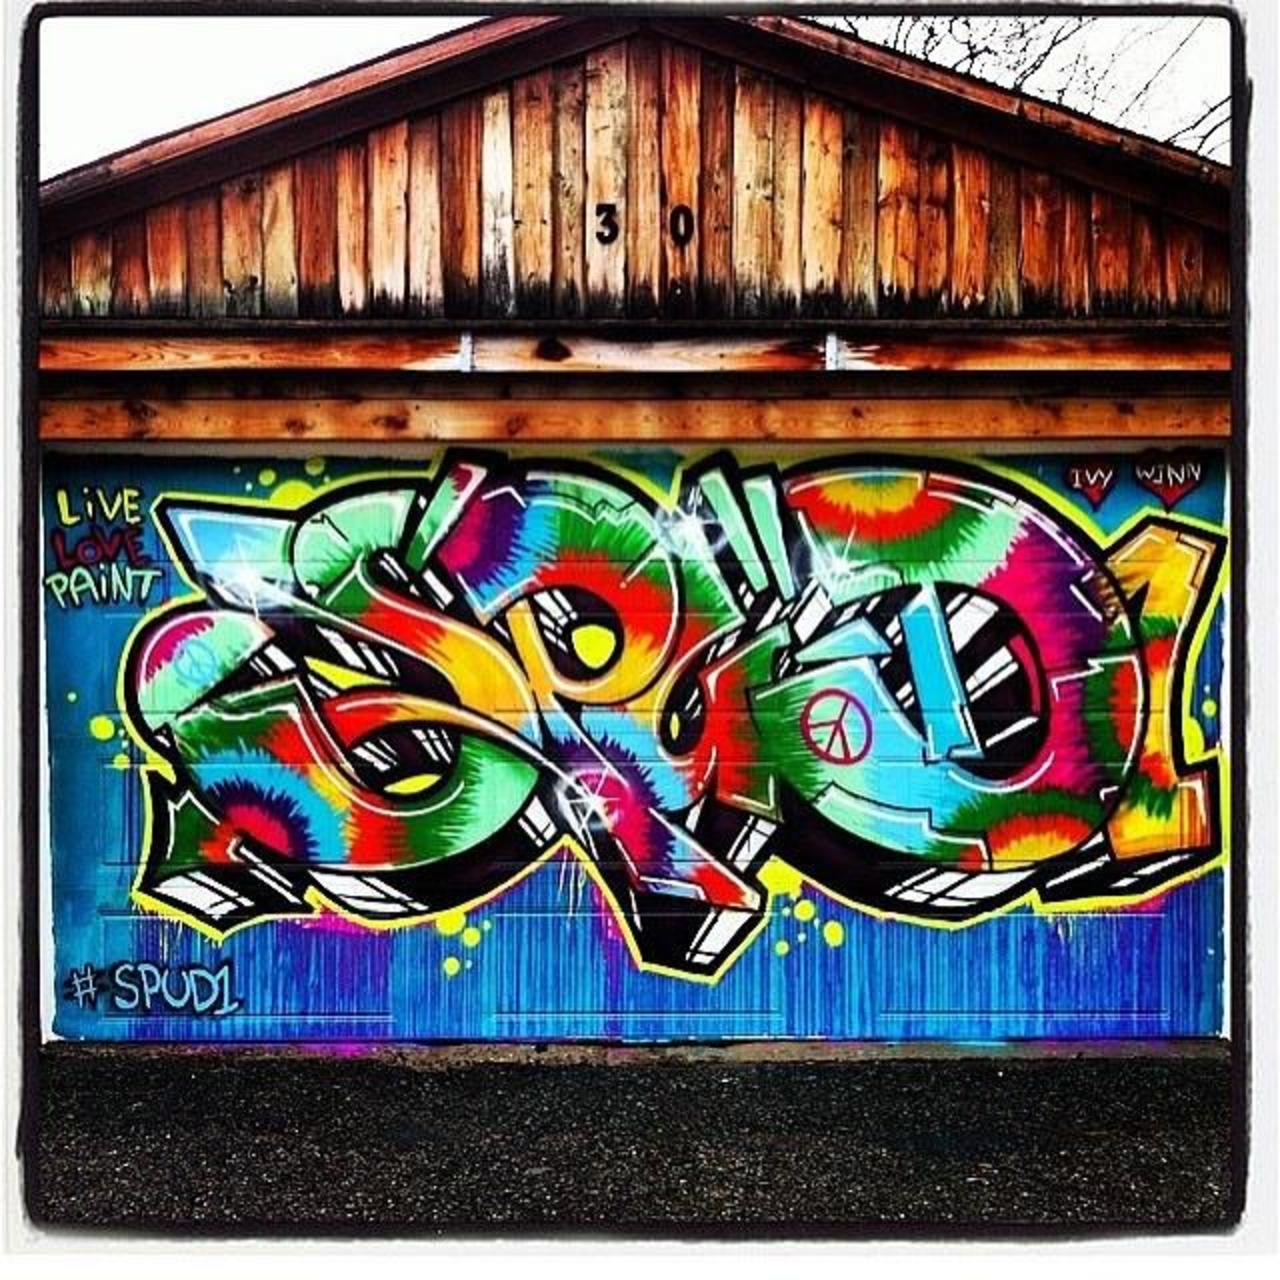 #graffitiporn #torontograffiti  #spud1 #graffiti  #spudbomb  #mtn #mtncans #mtncolors  #streetart  #spud1OTM #stree… http://t.co/wKetWqwqqz